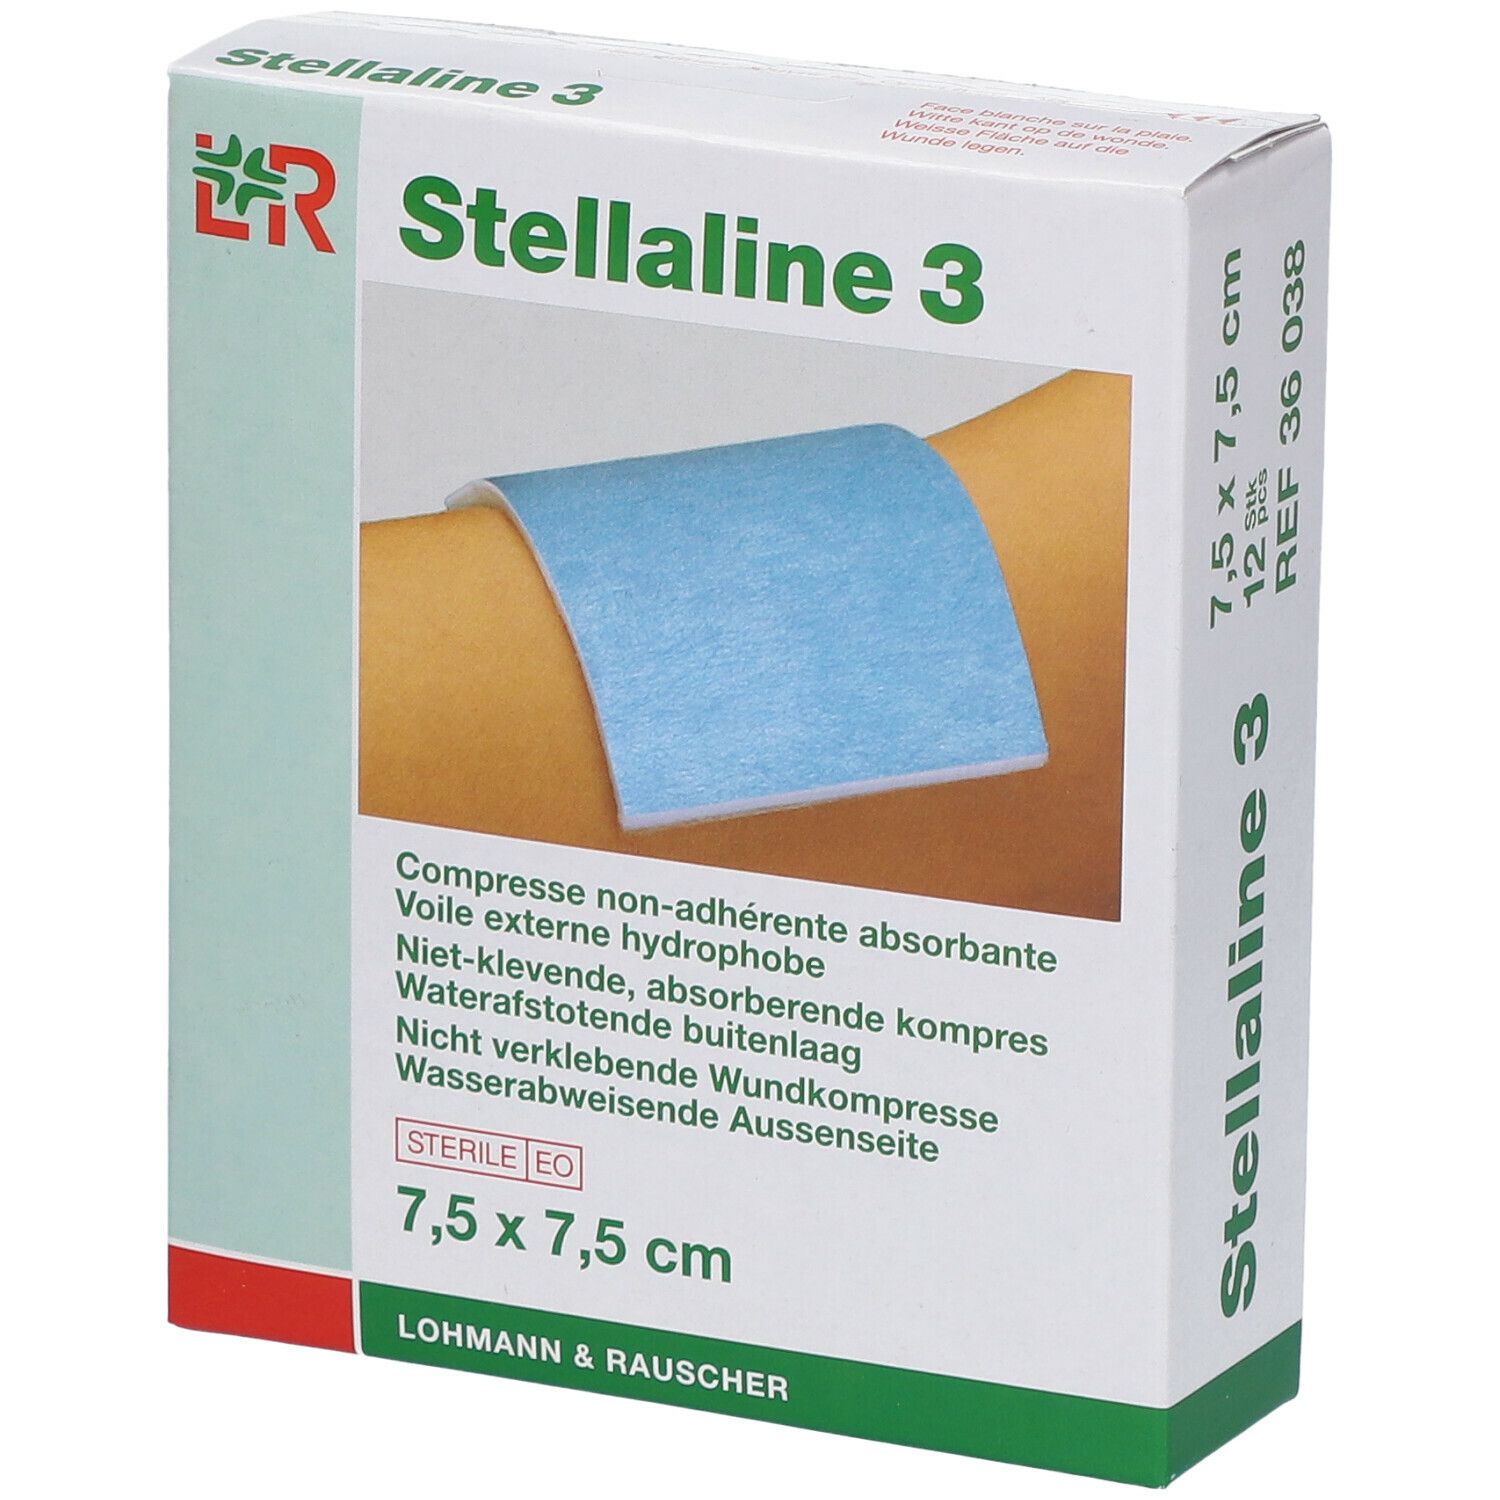 Stellaline 3 Compresse absorbante 7,5 cm x 7,5 cm